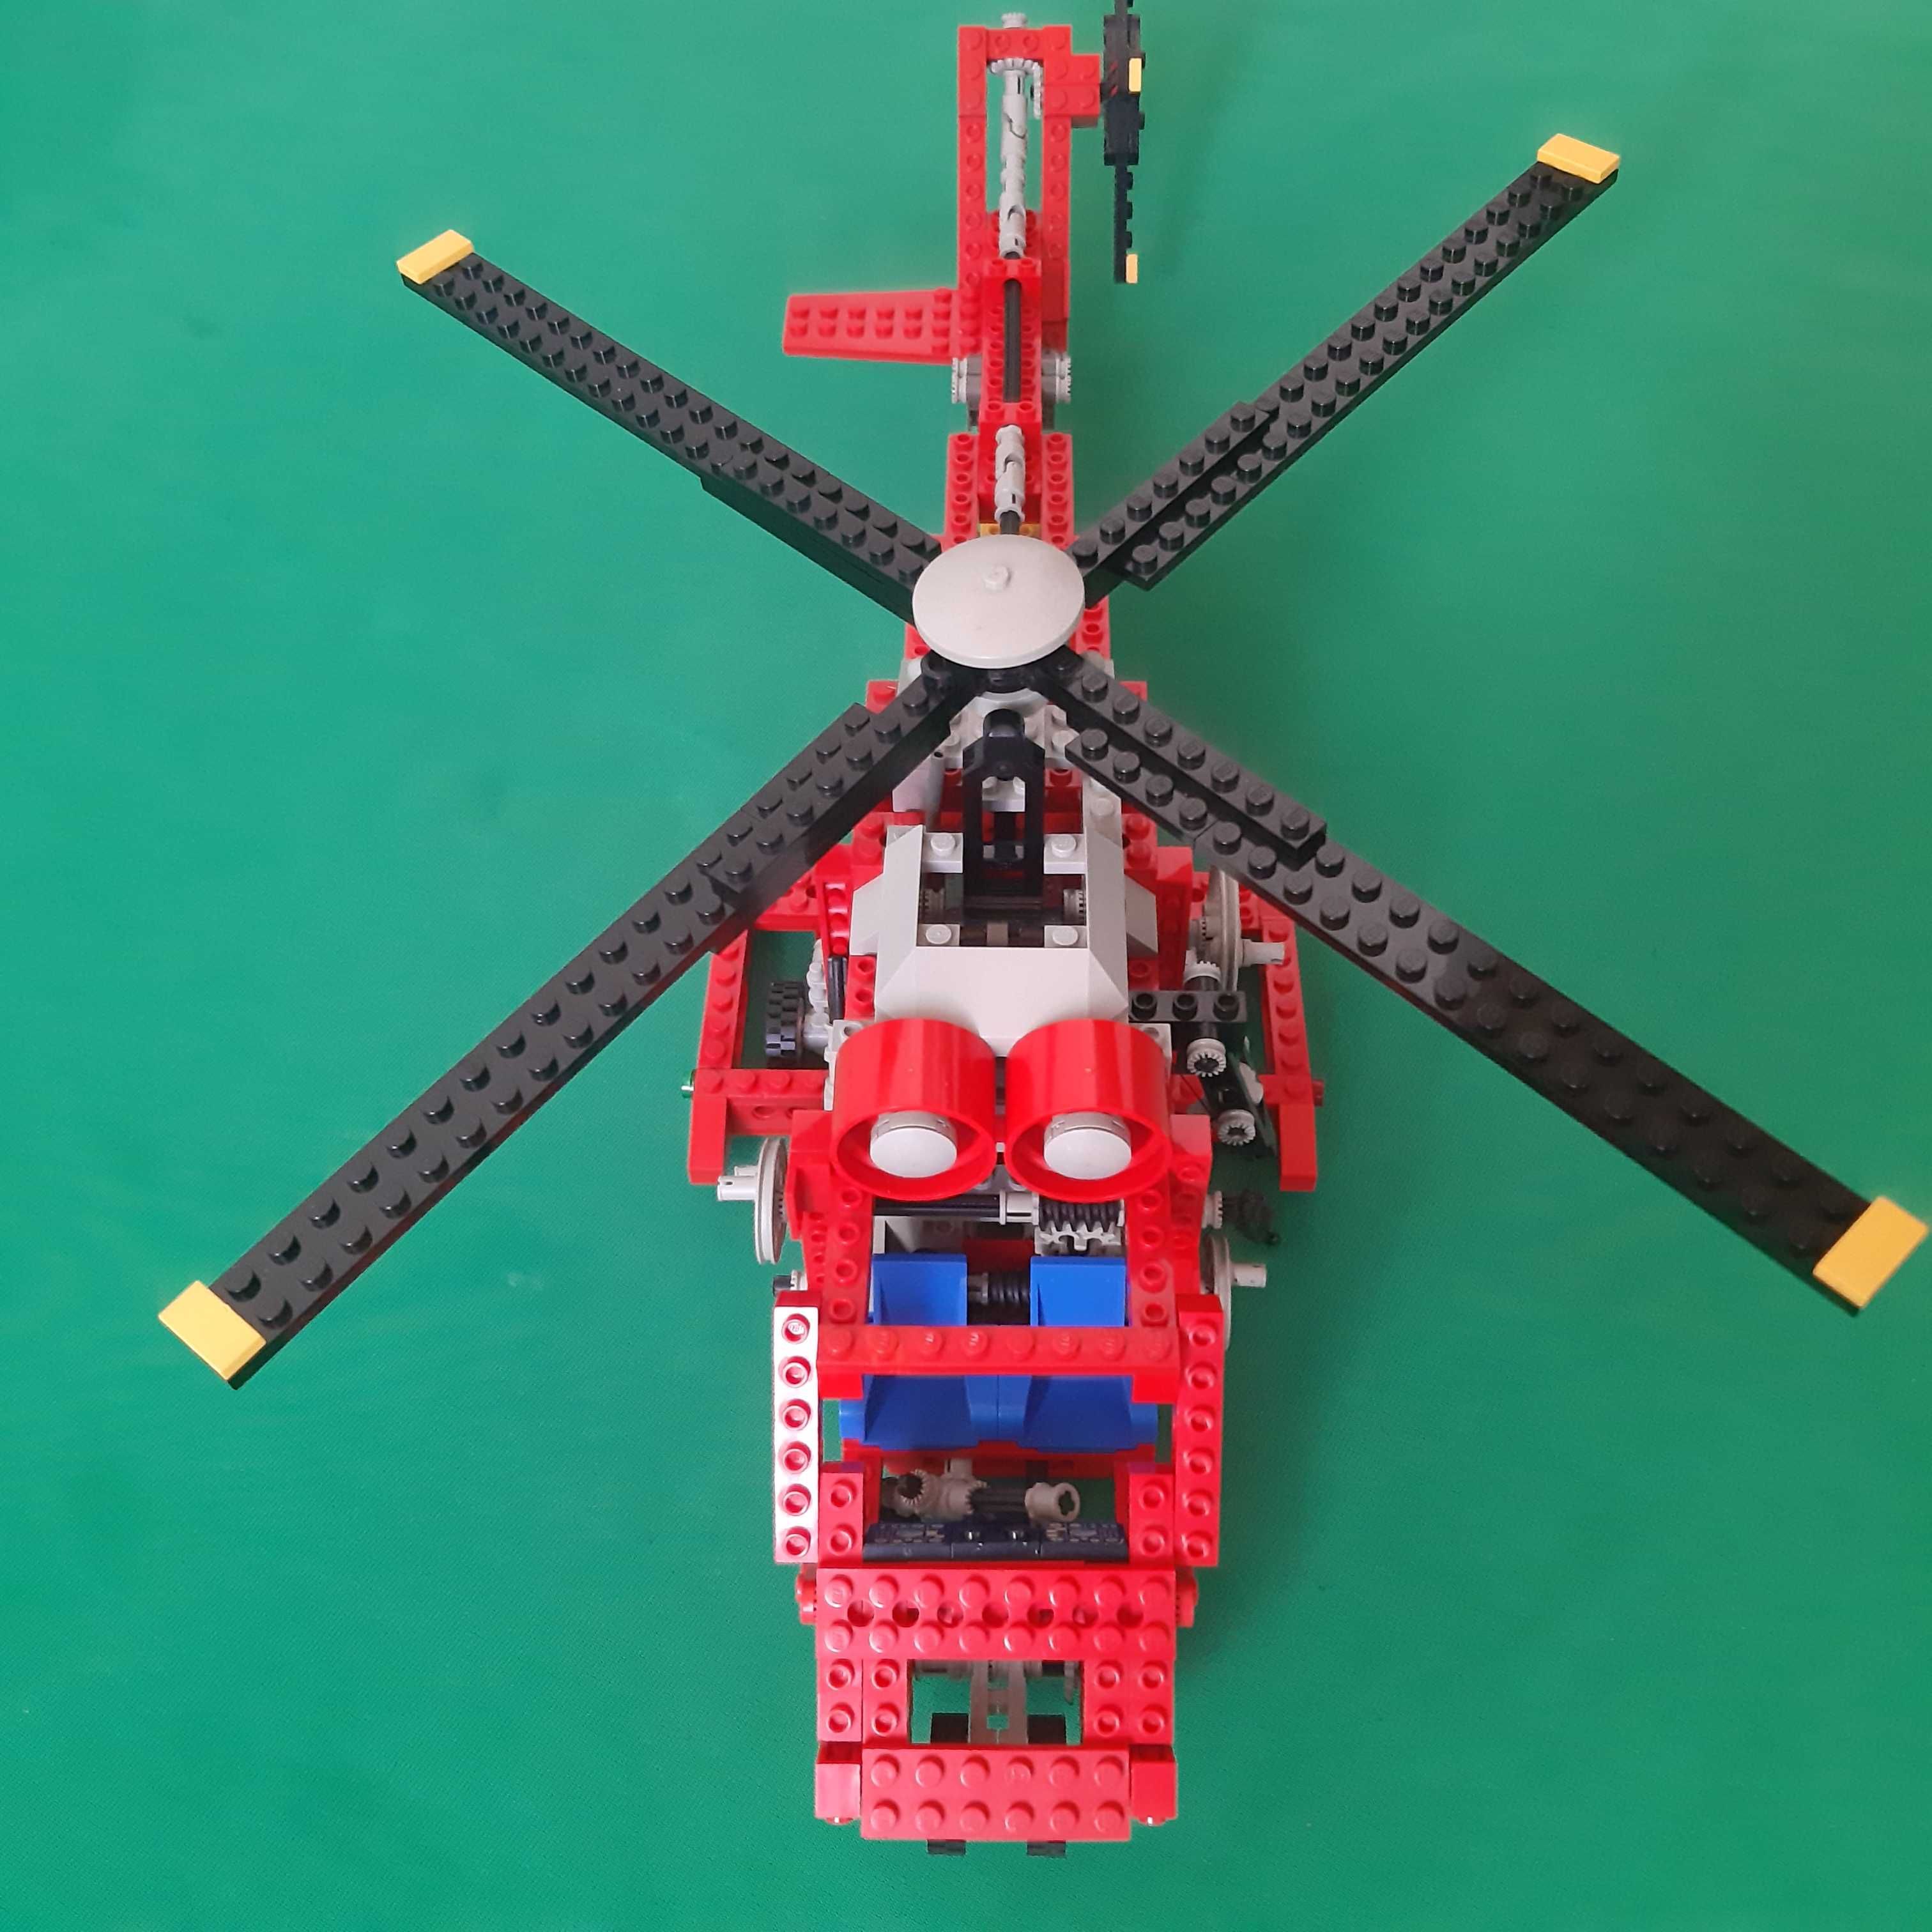 Lego Technic 8856 Whirlwind Rescue - Ano 1991